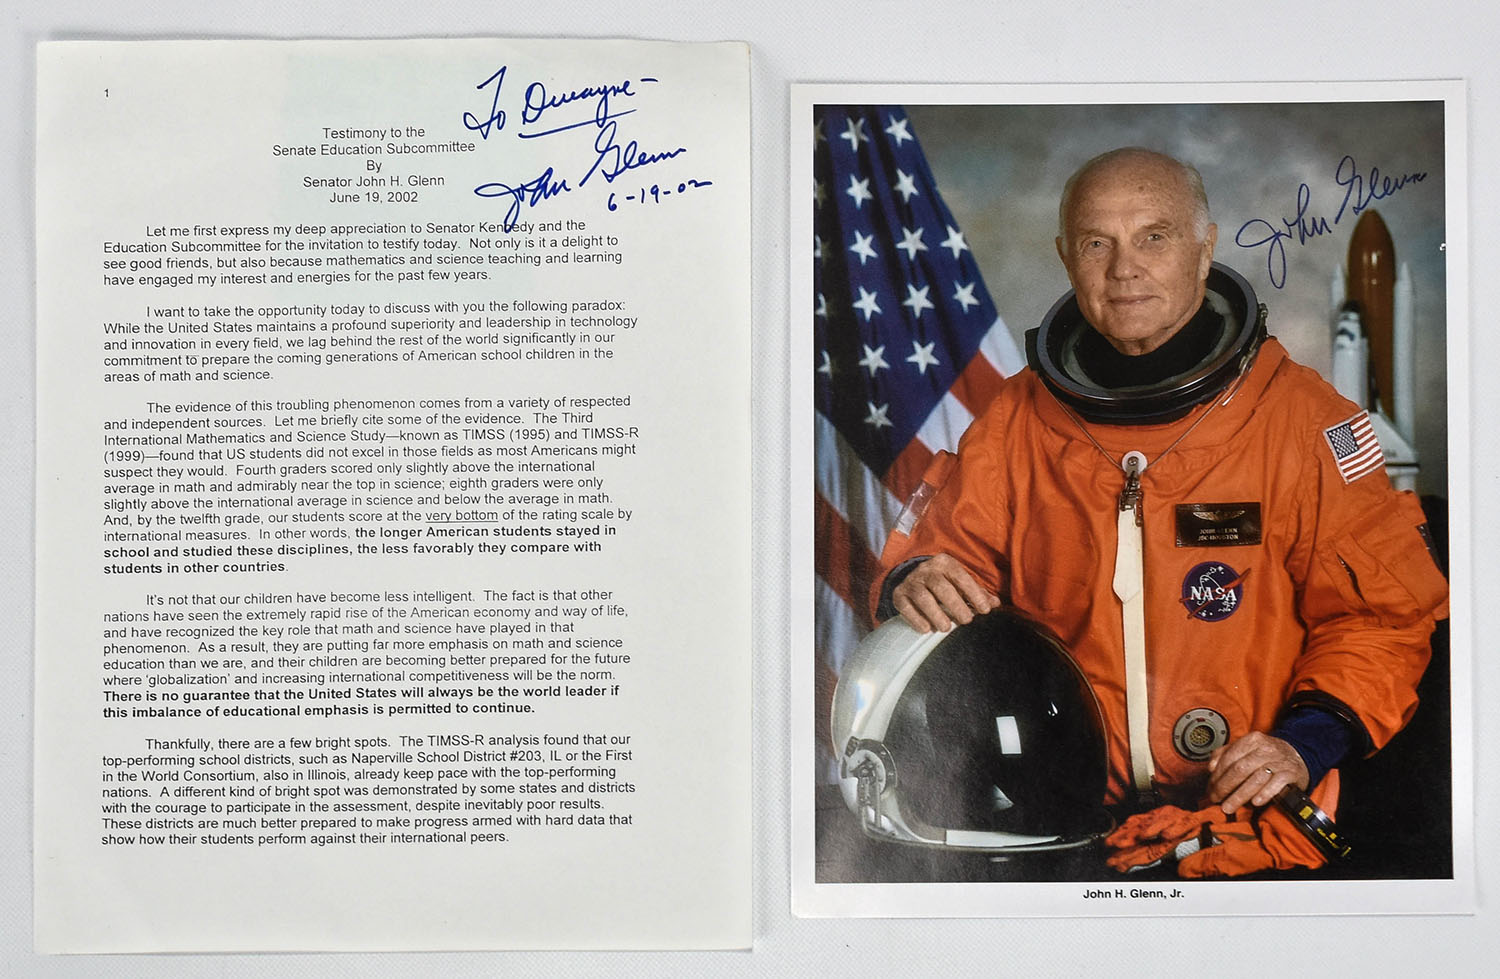 Col John Glenn Autographed Photo & Signed Paper